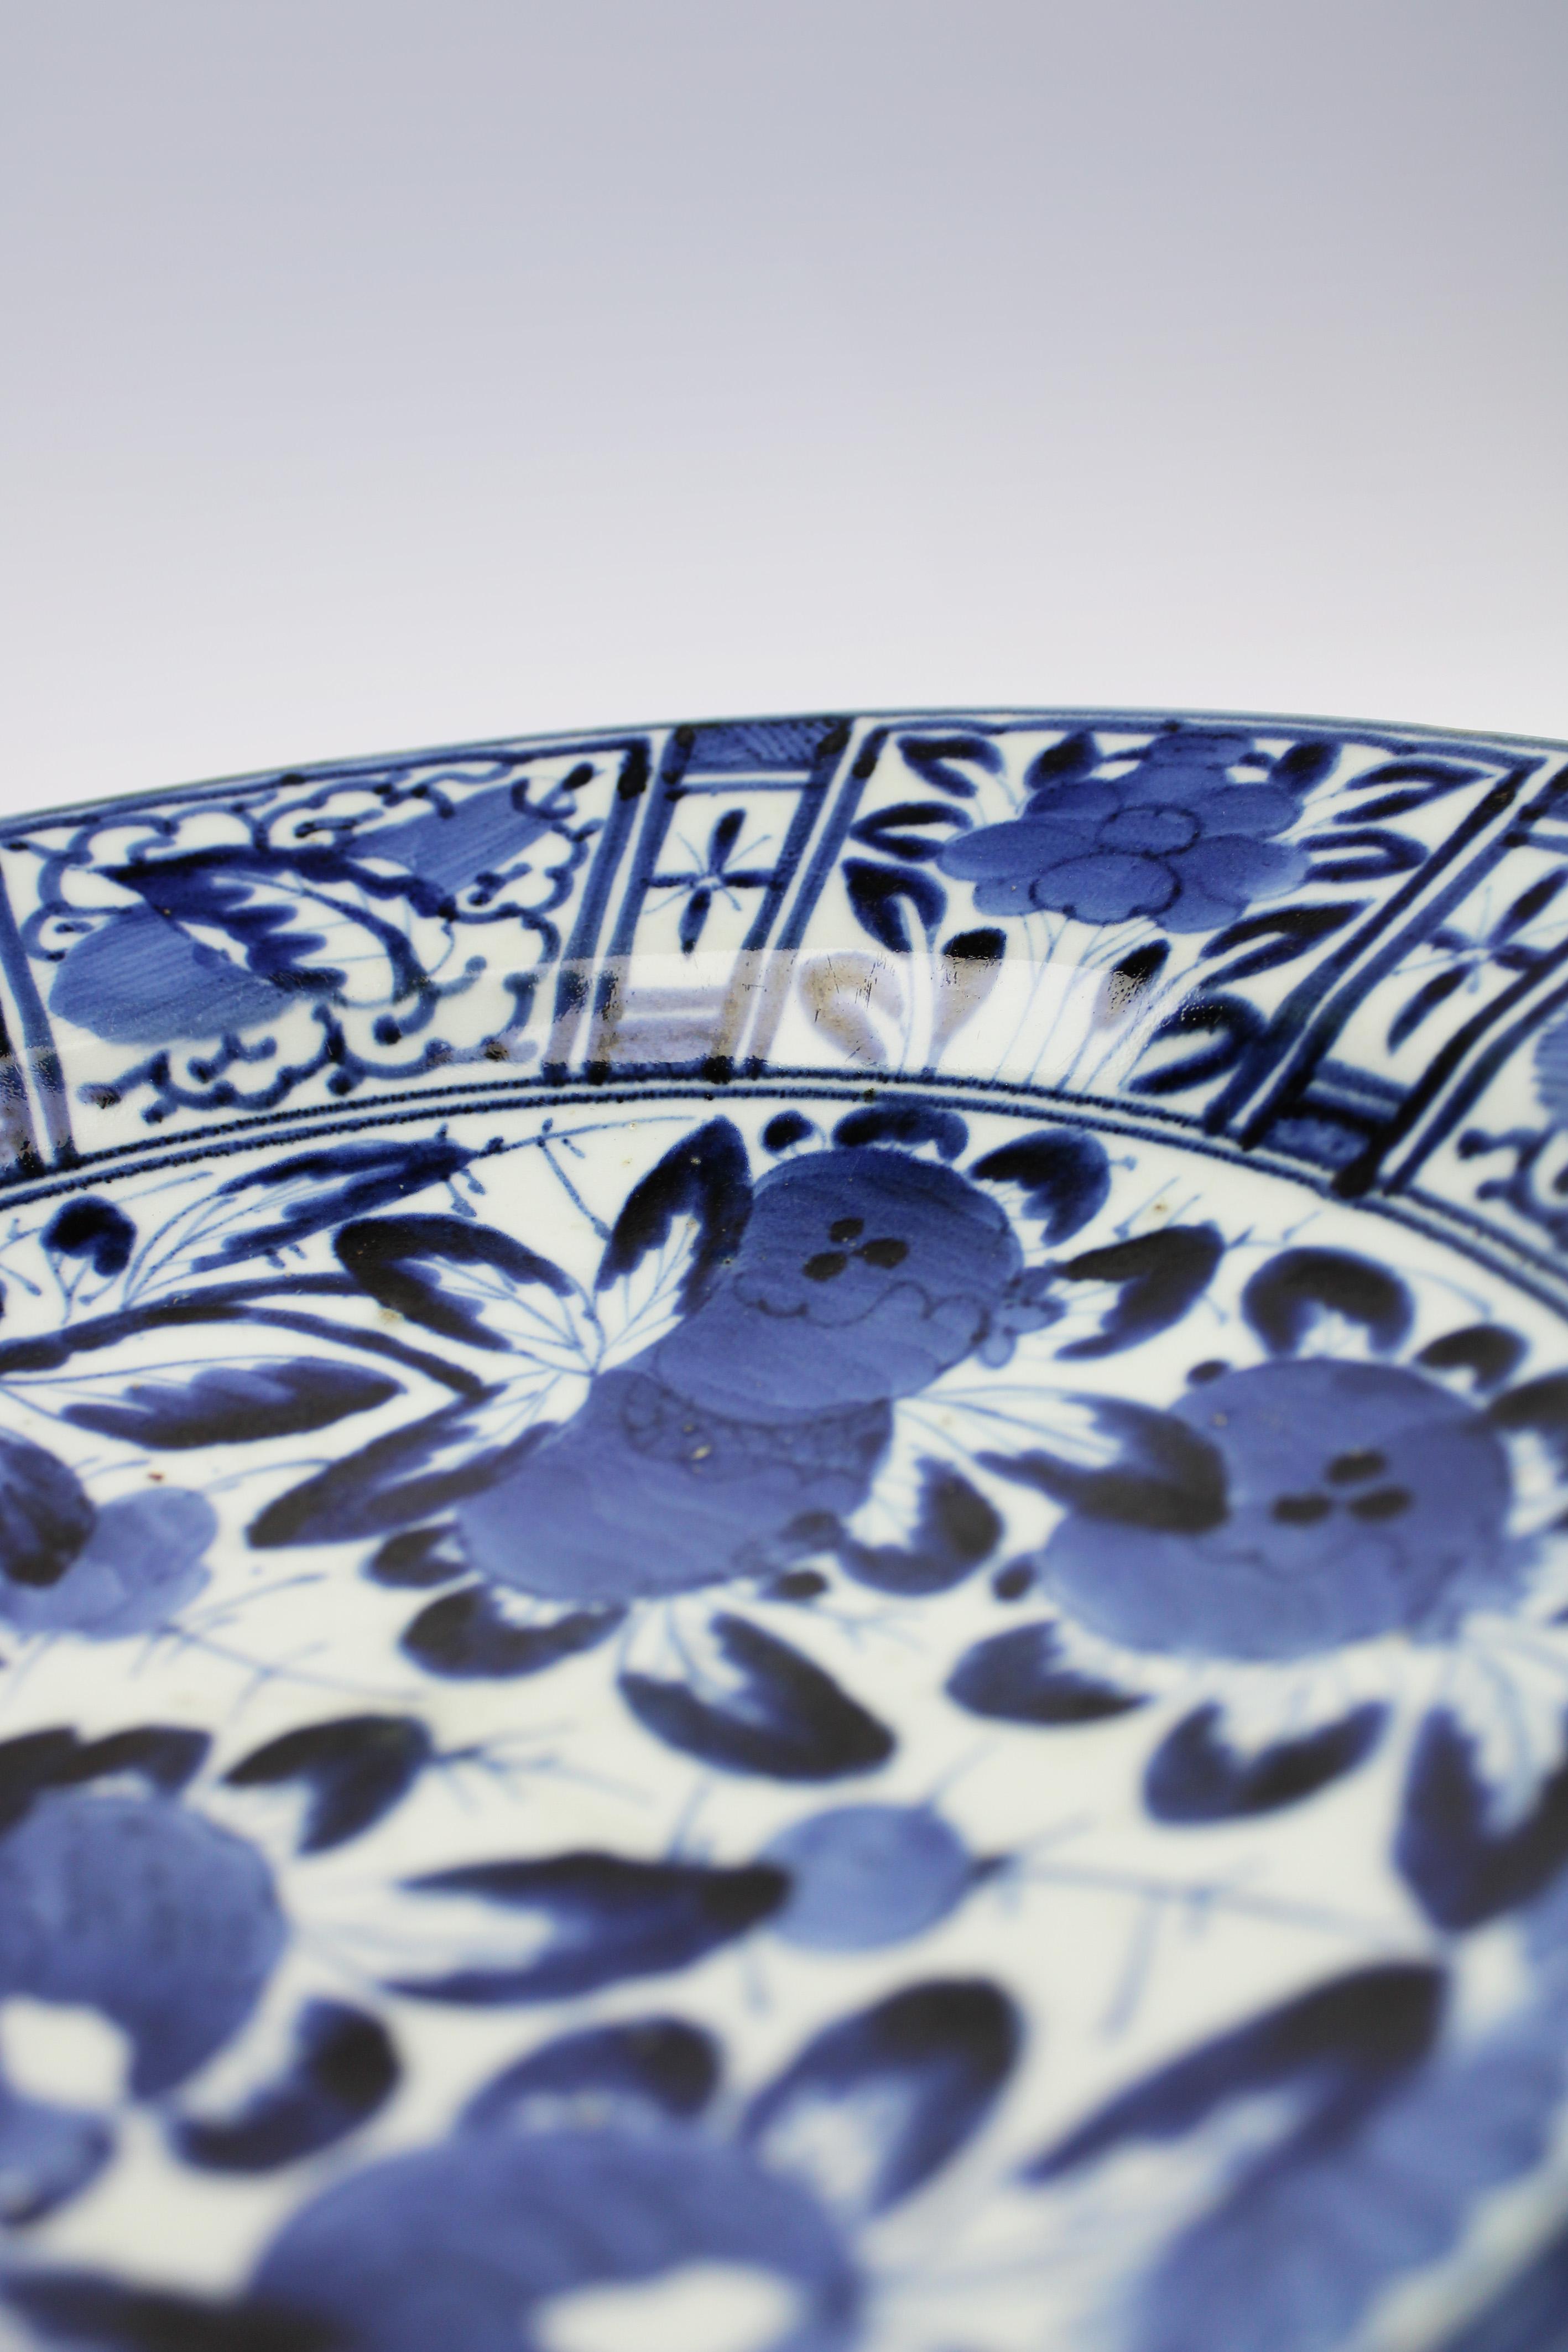 18th Century and Earlier 18th Century Porcelain Plate Japanese Arita Edo Period Kraak Blue White Japan  For Sale